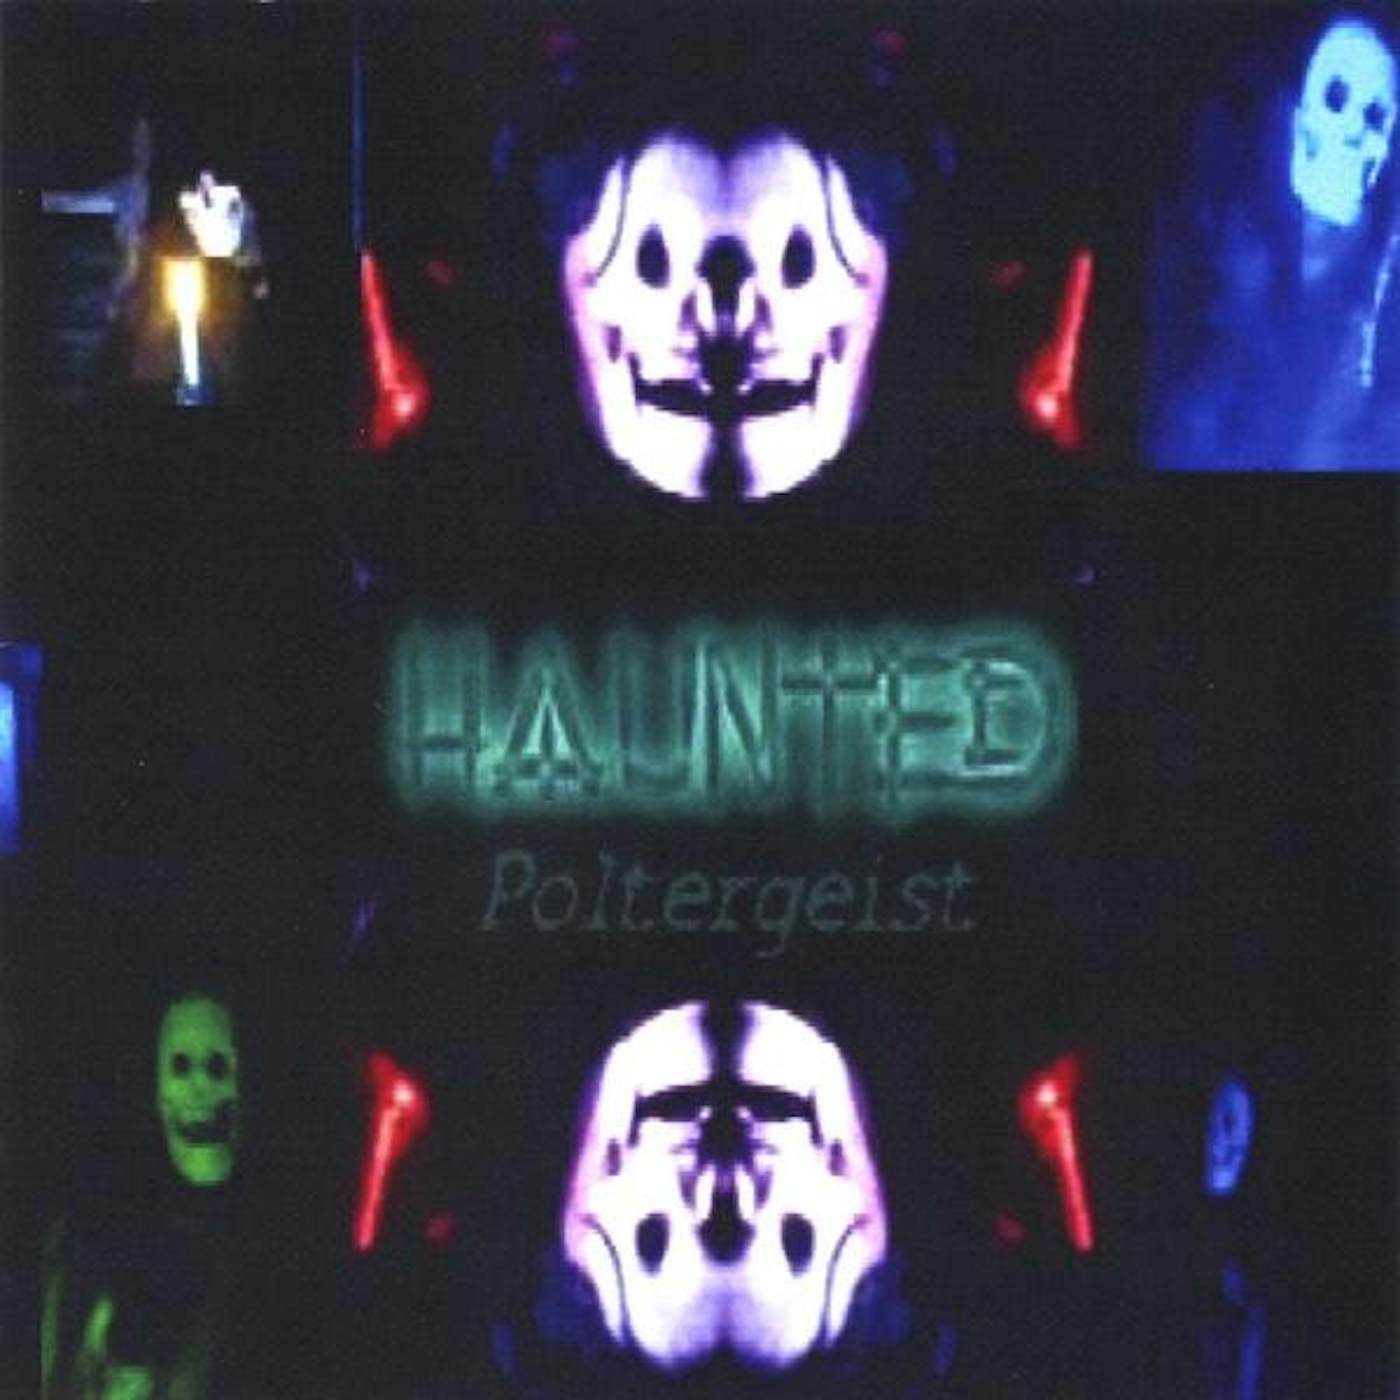 Haunted POLTERGEIST CD